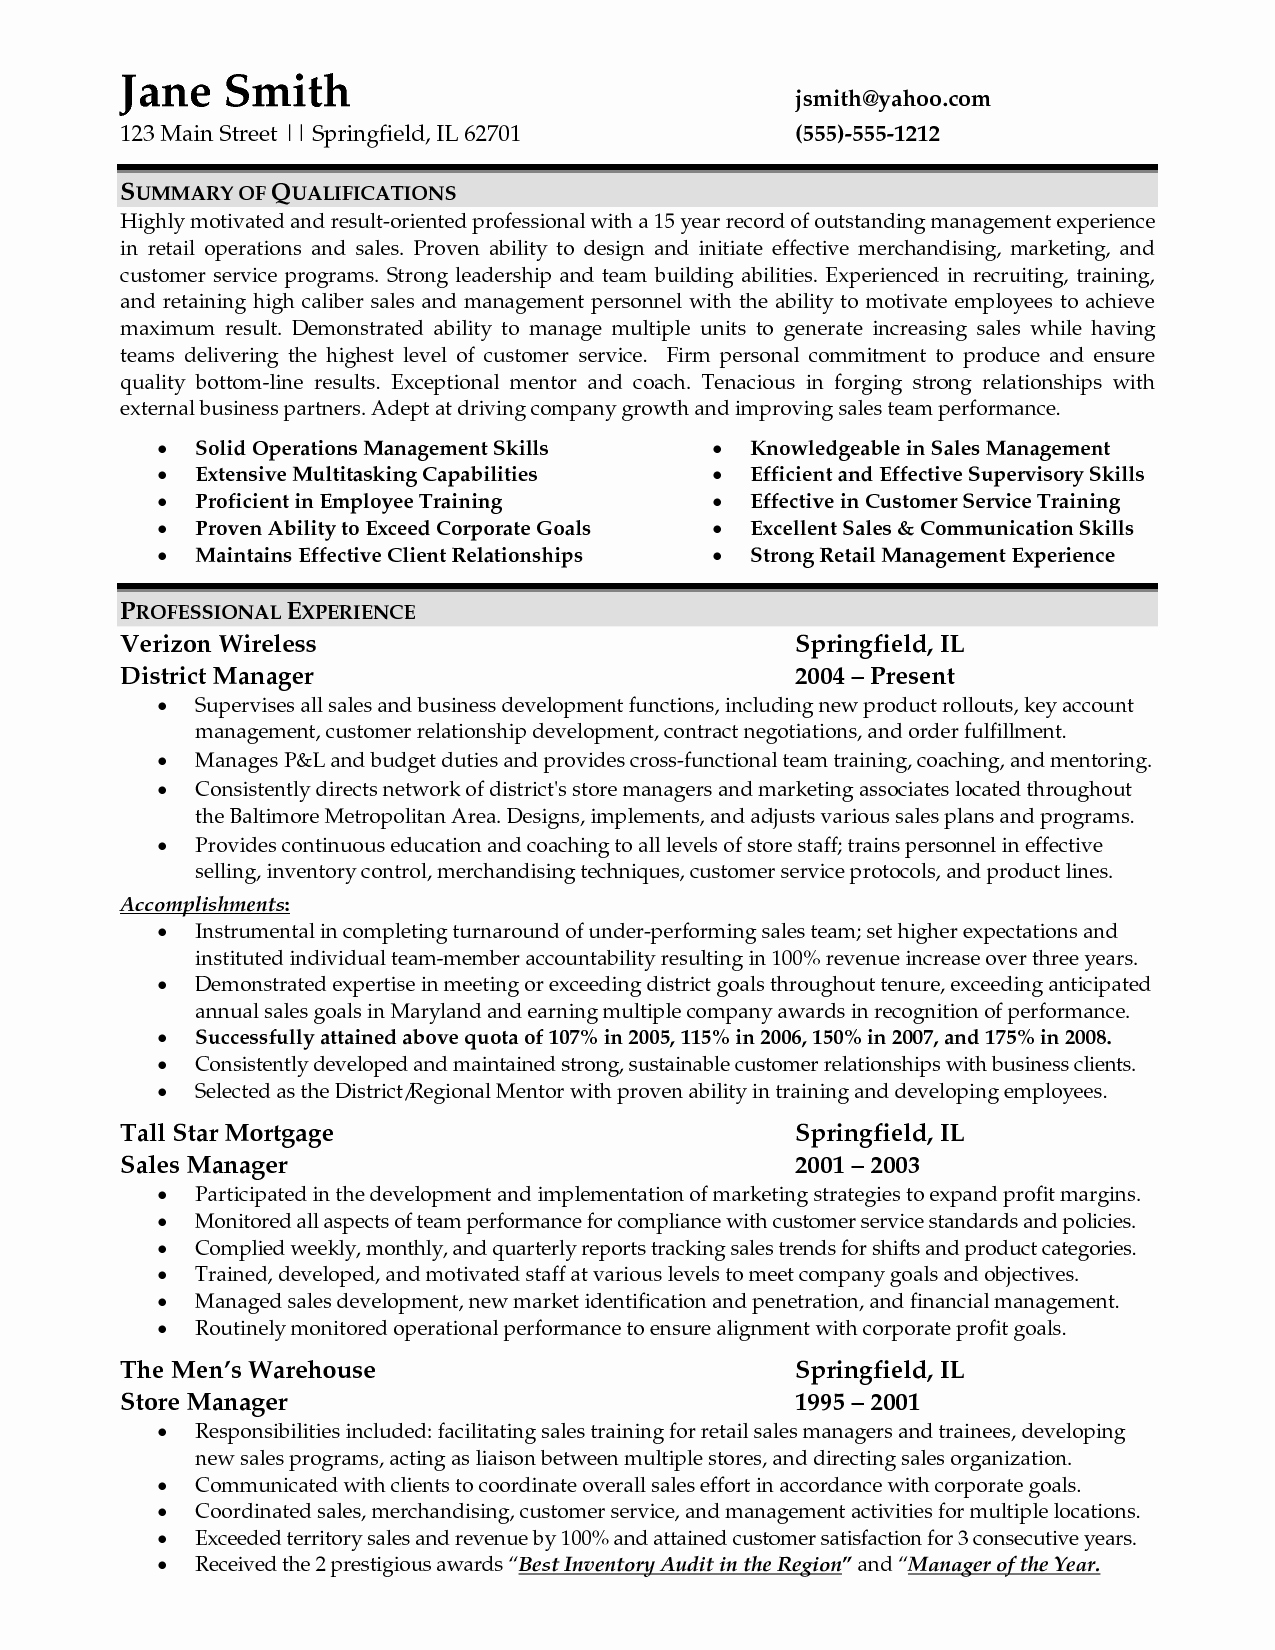 Sample Resume for Retail Management Job